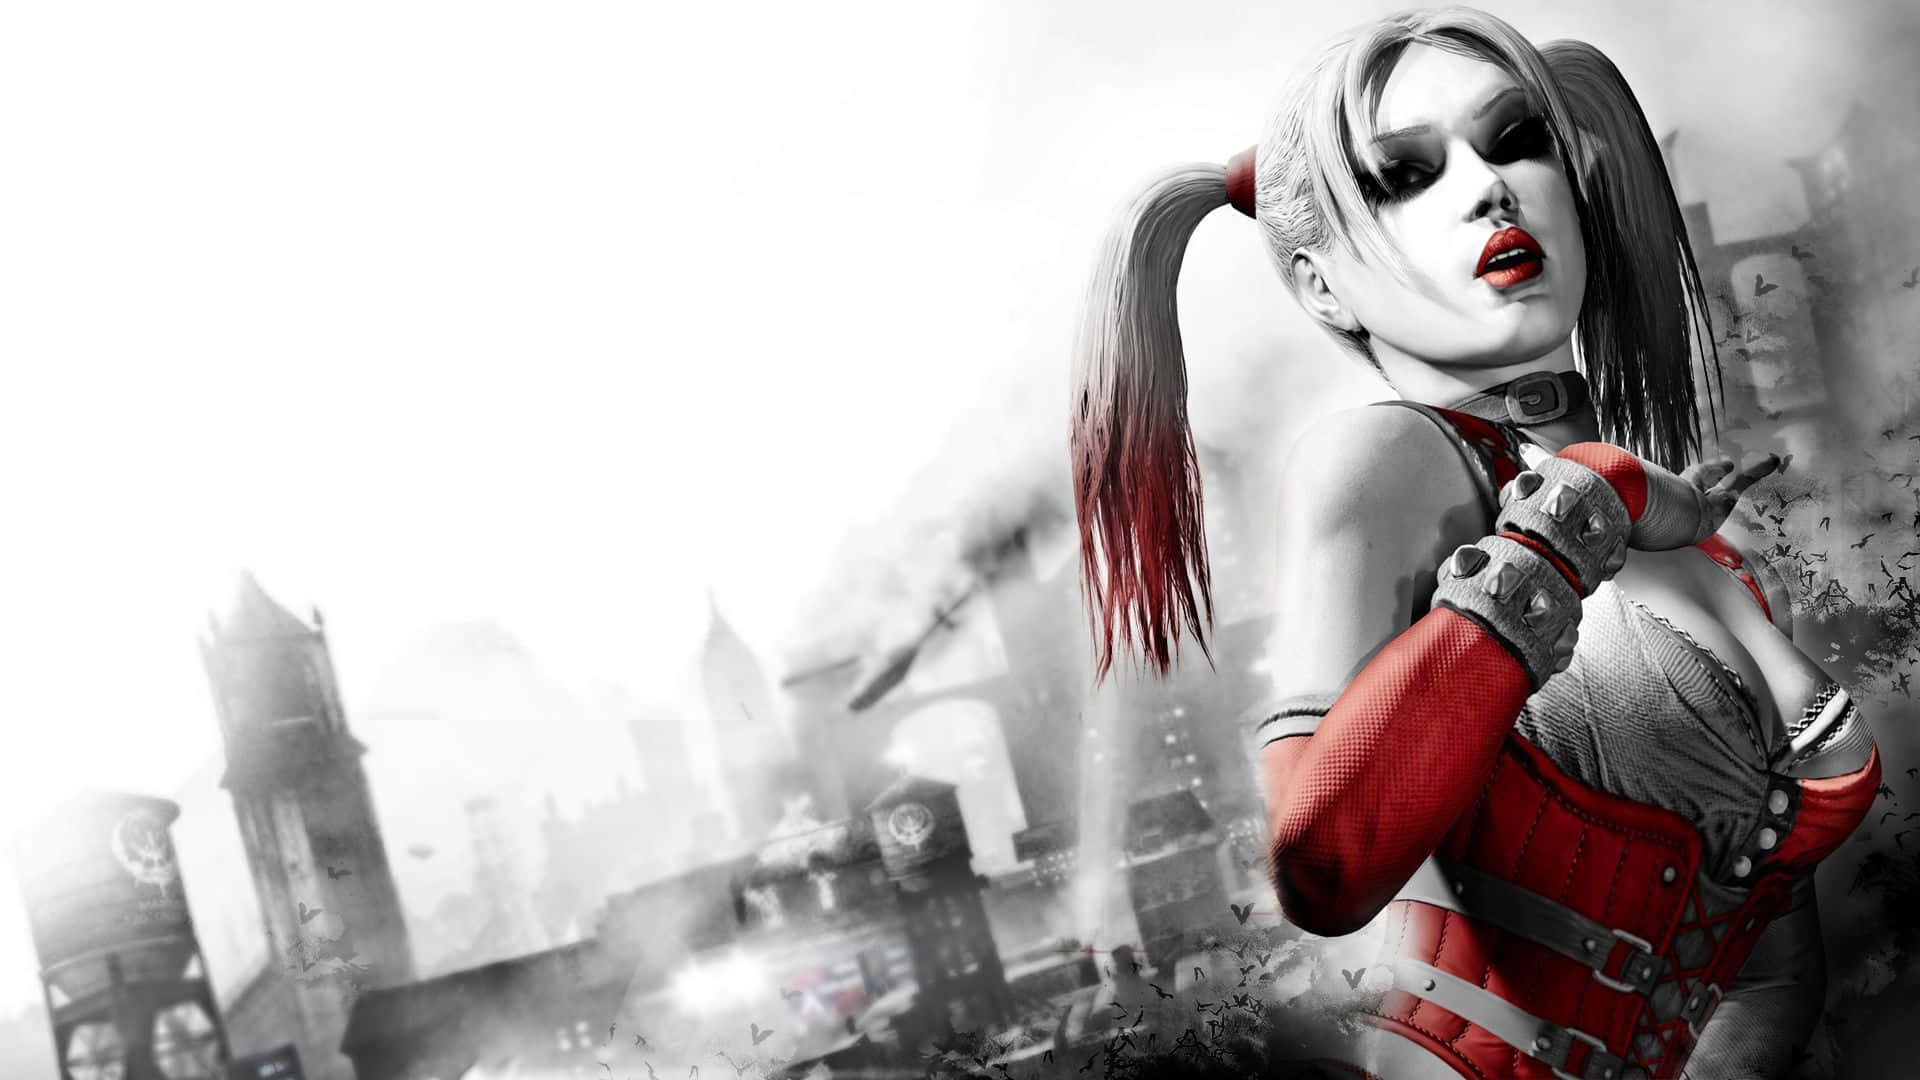 Harley Quinn Arkham City Wallpaper